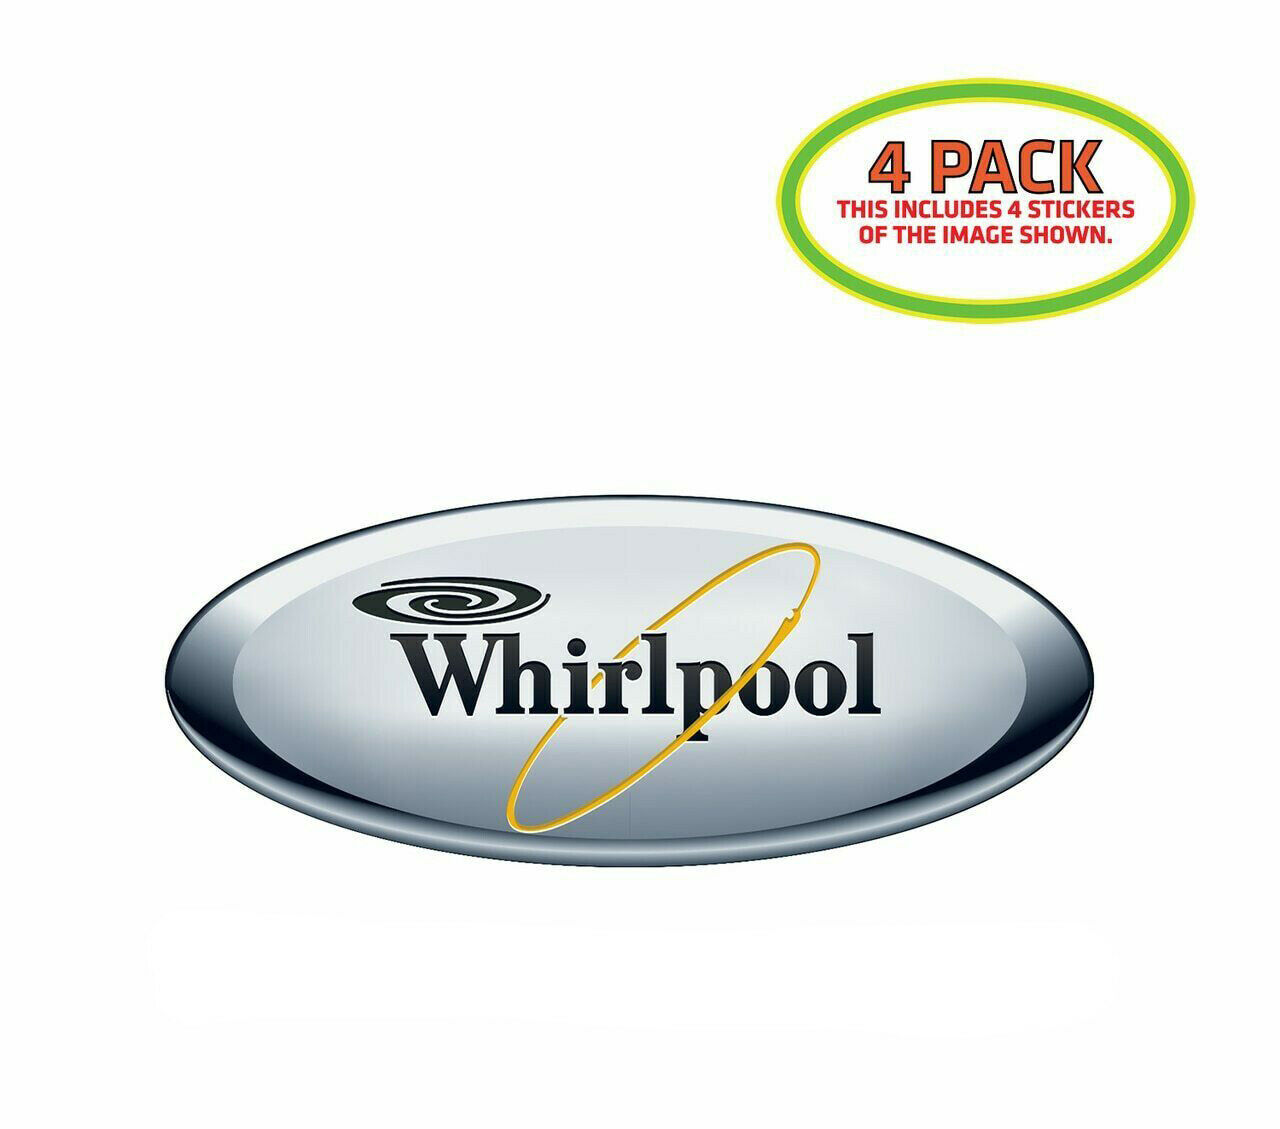 Whirlpool 2005 Sticker Vinyl Decal 4 Pack